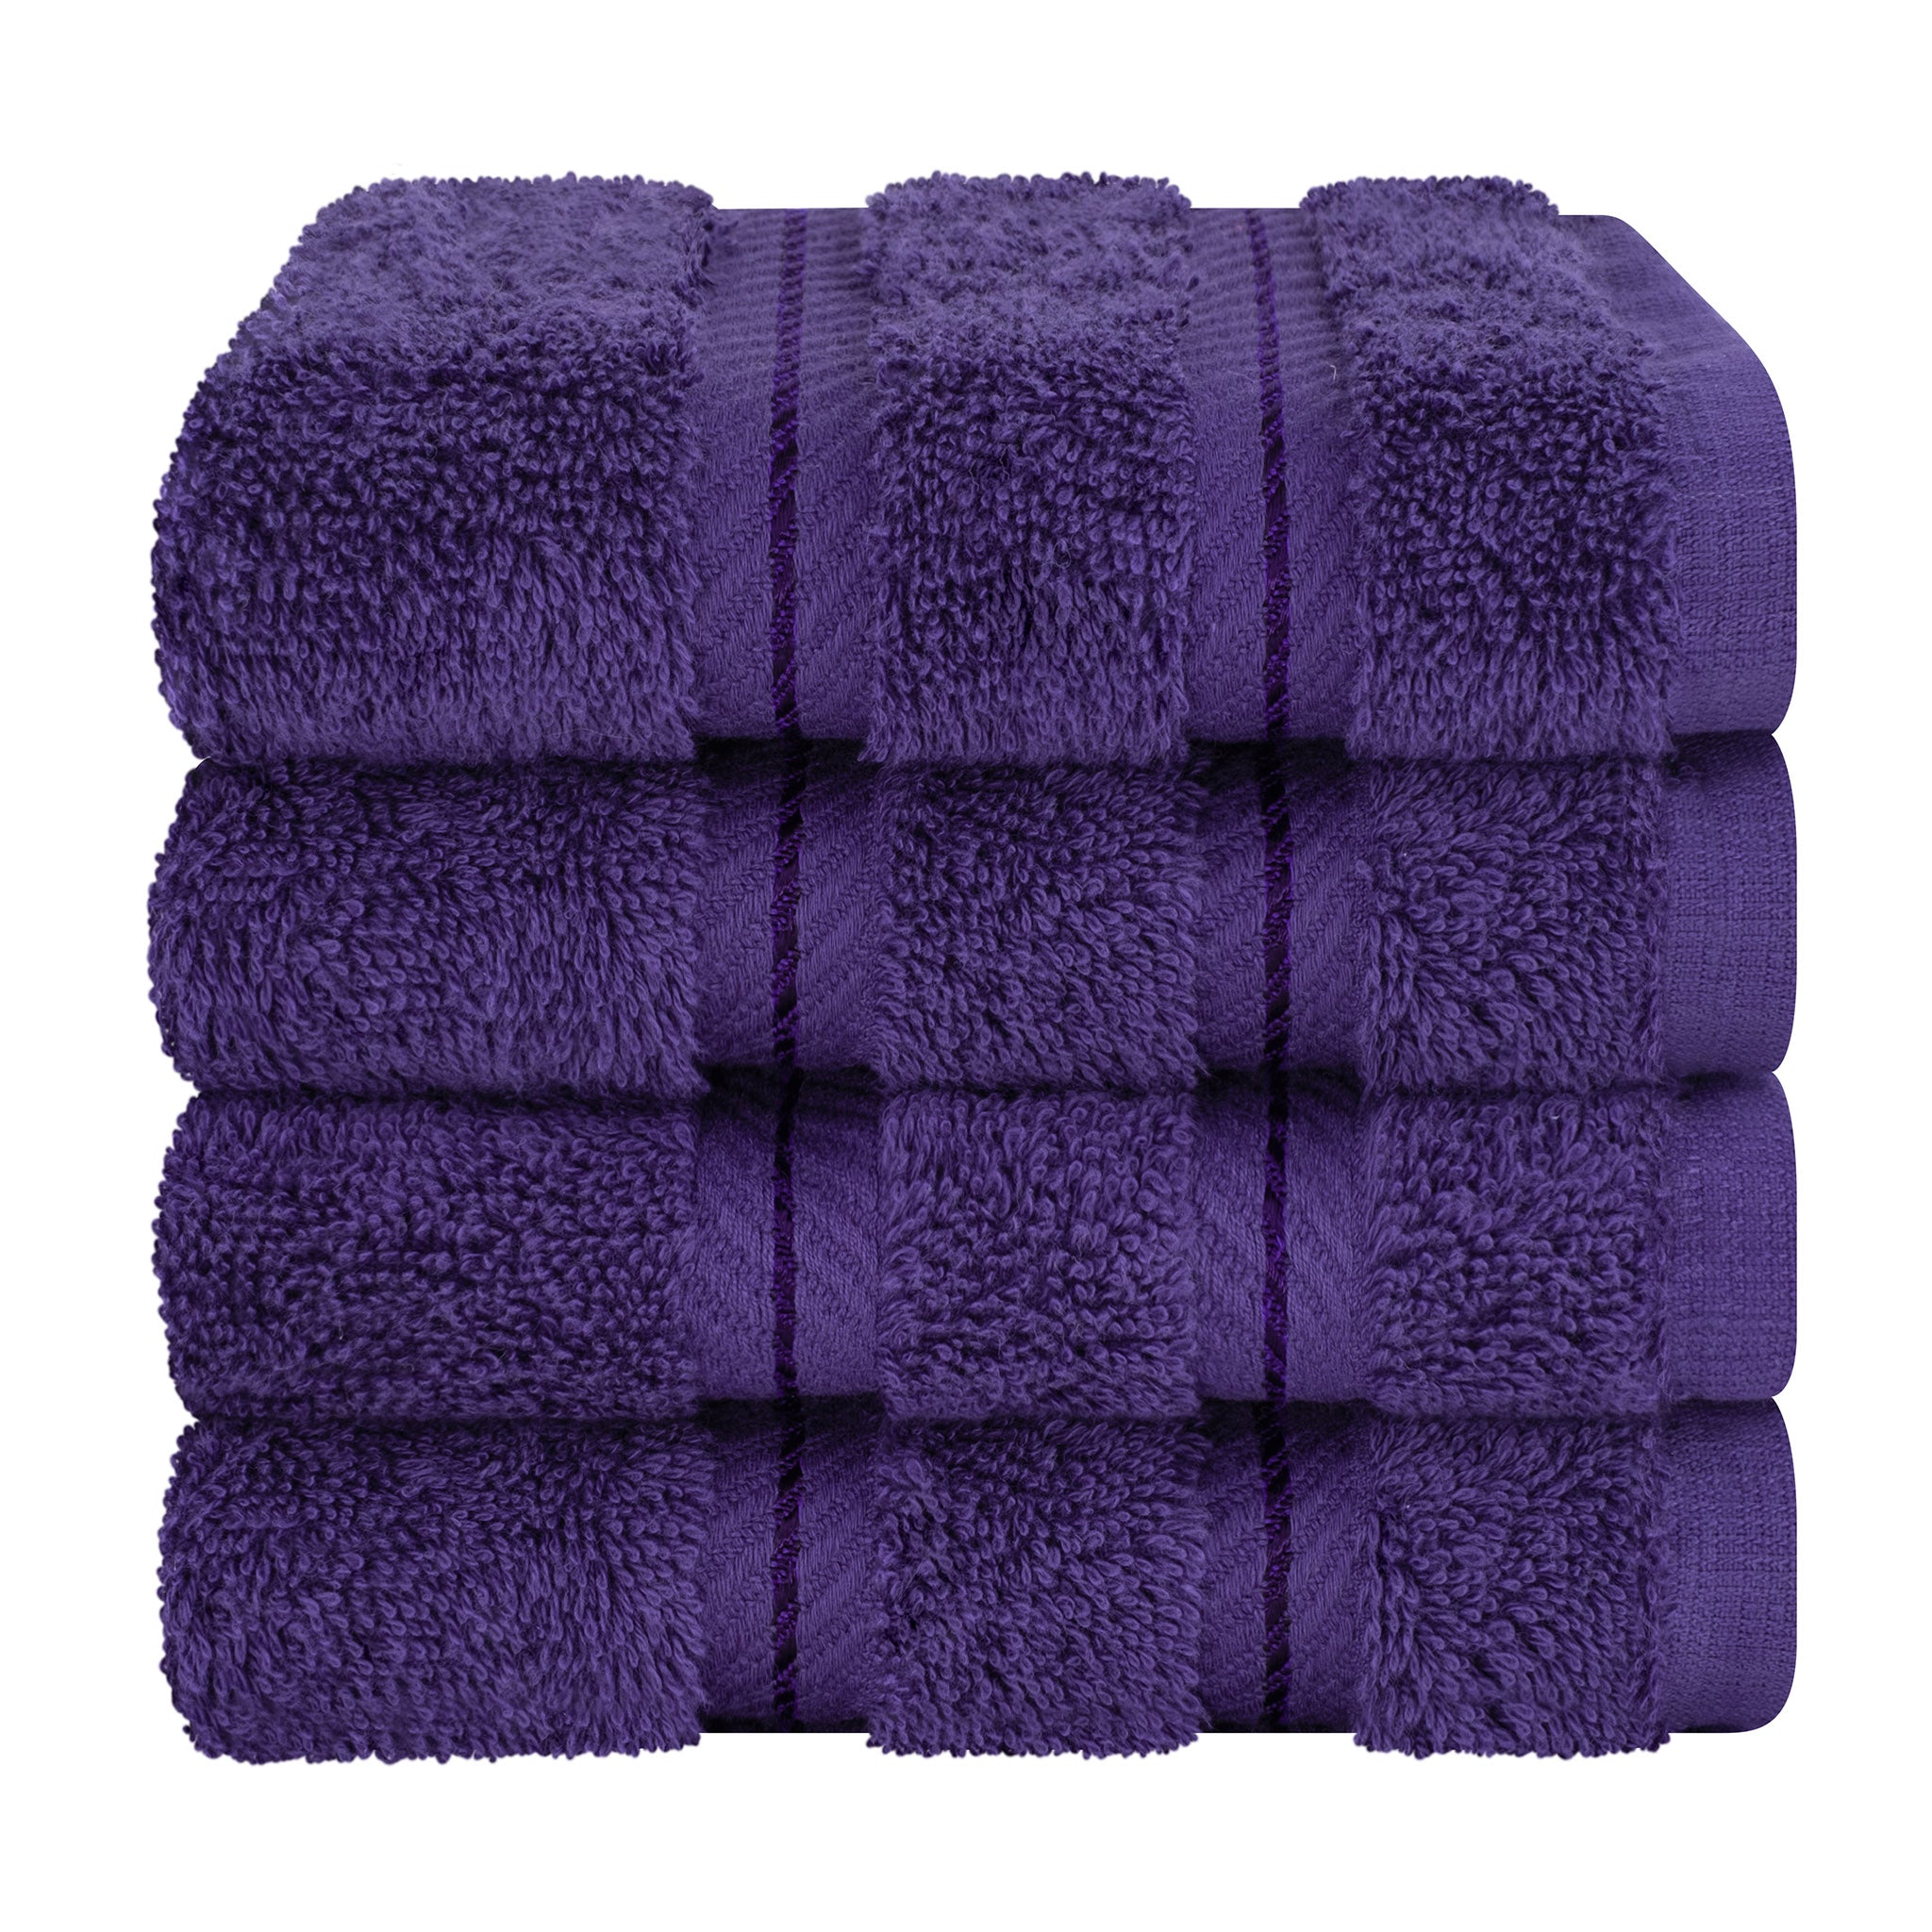  American Soft Linen 100% Turkish Cotton 4 Piece Washcloth Set - Wholesale - purple-7